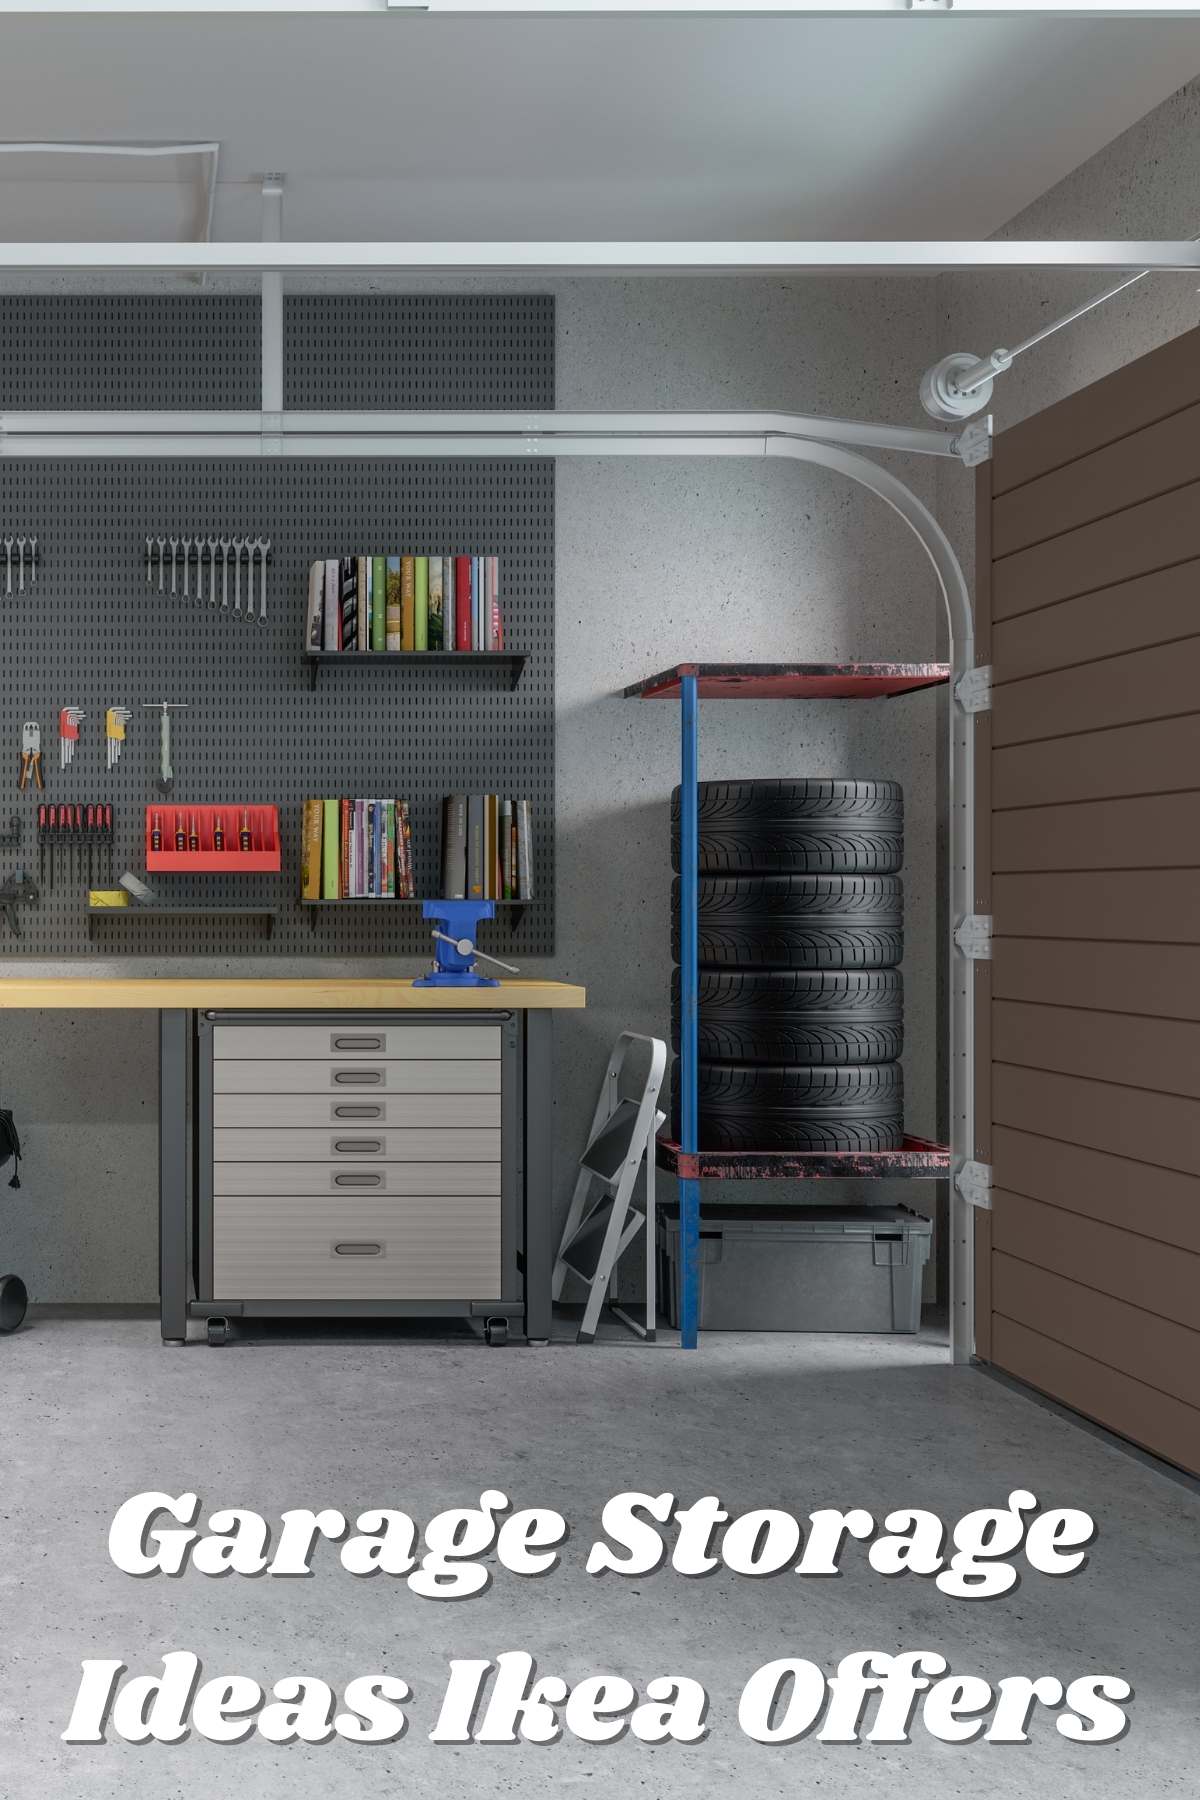 Garage Storage Ideas Ikea Offers